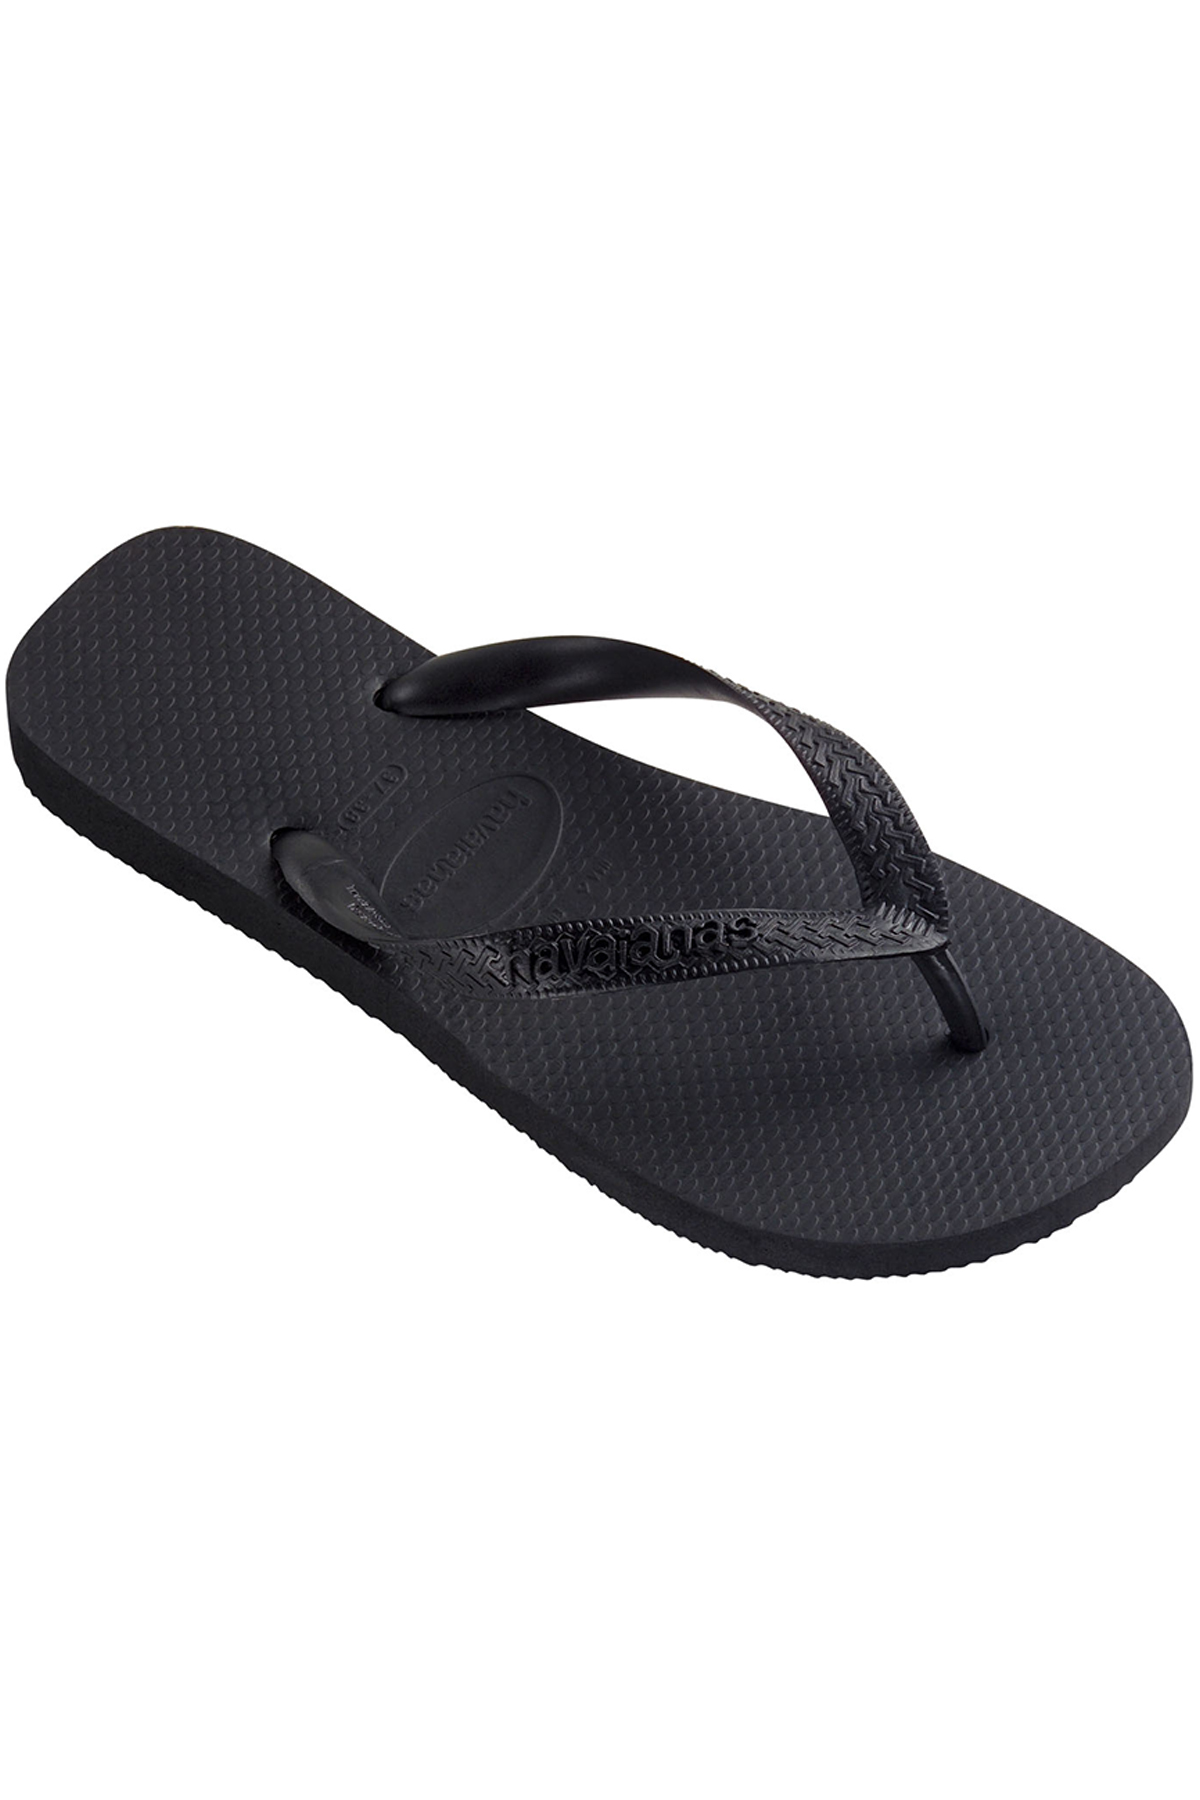 Havaianas Unisex Slippers - Black